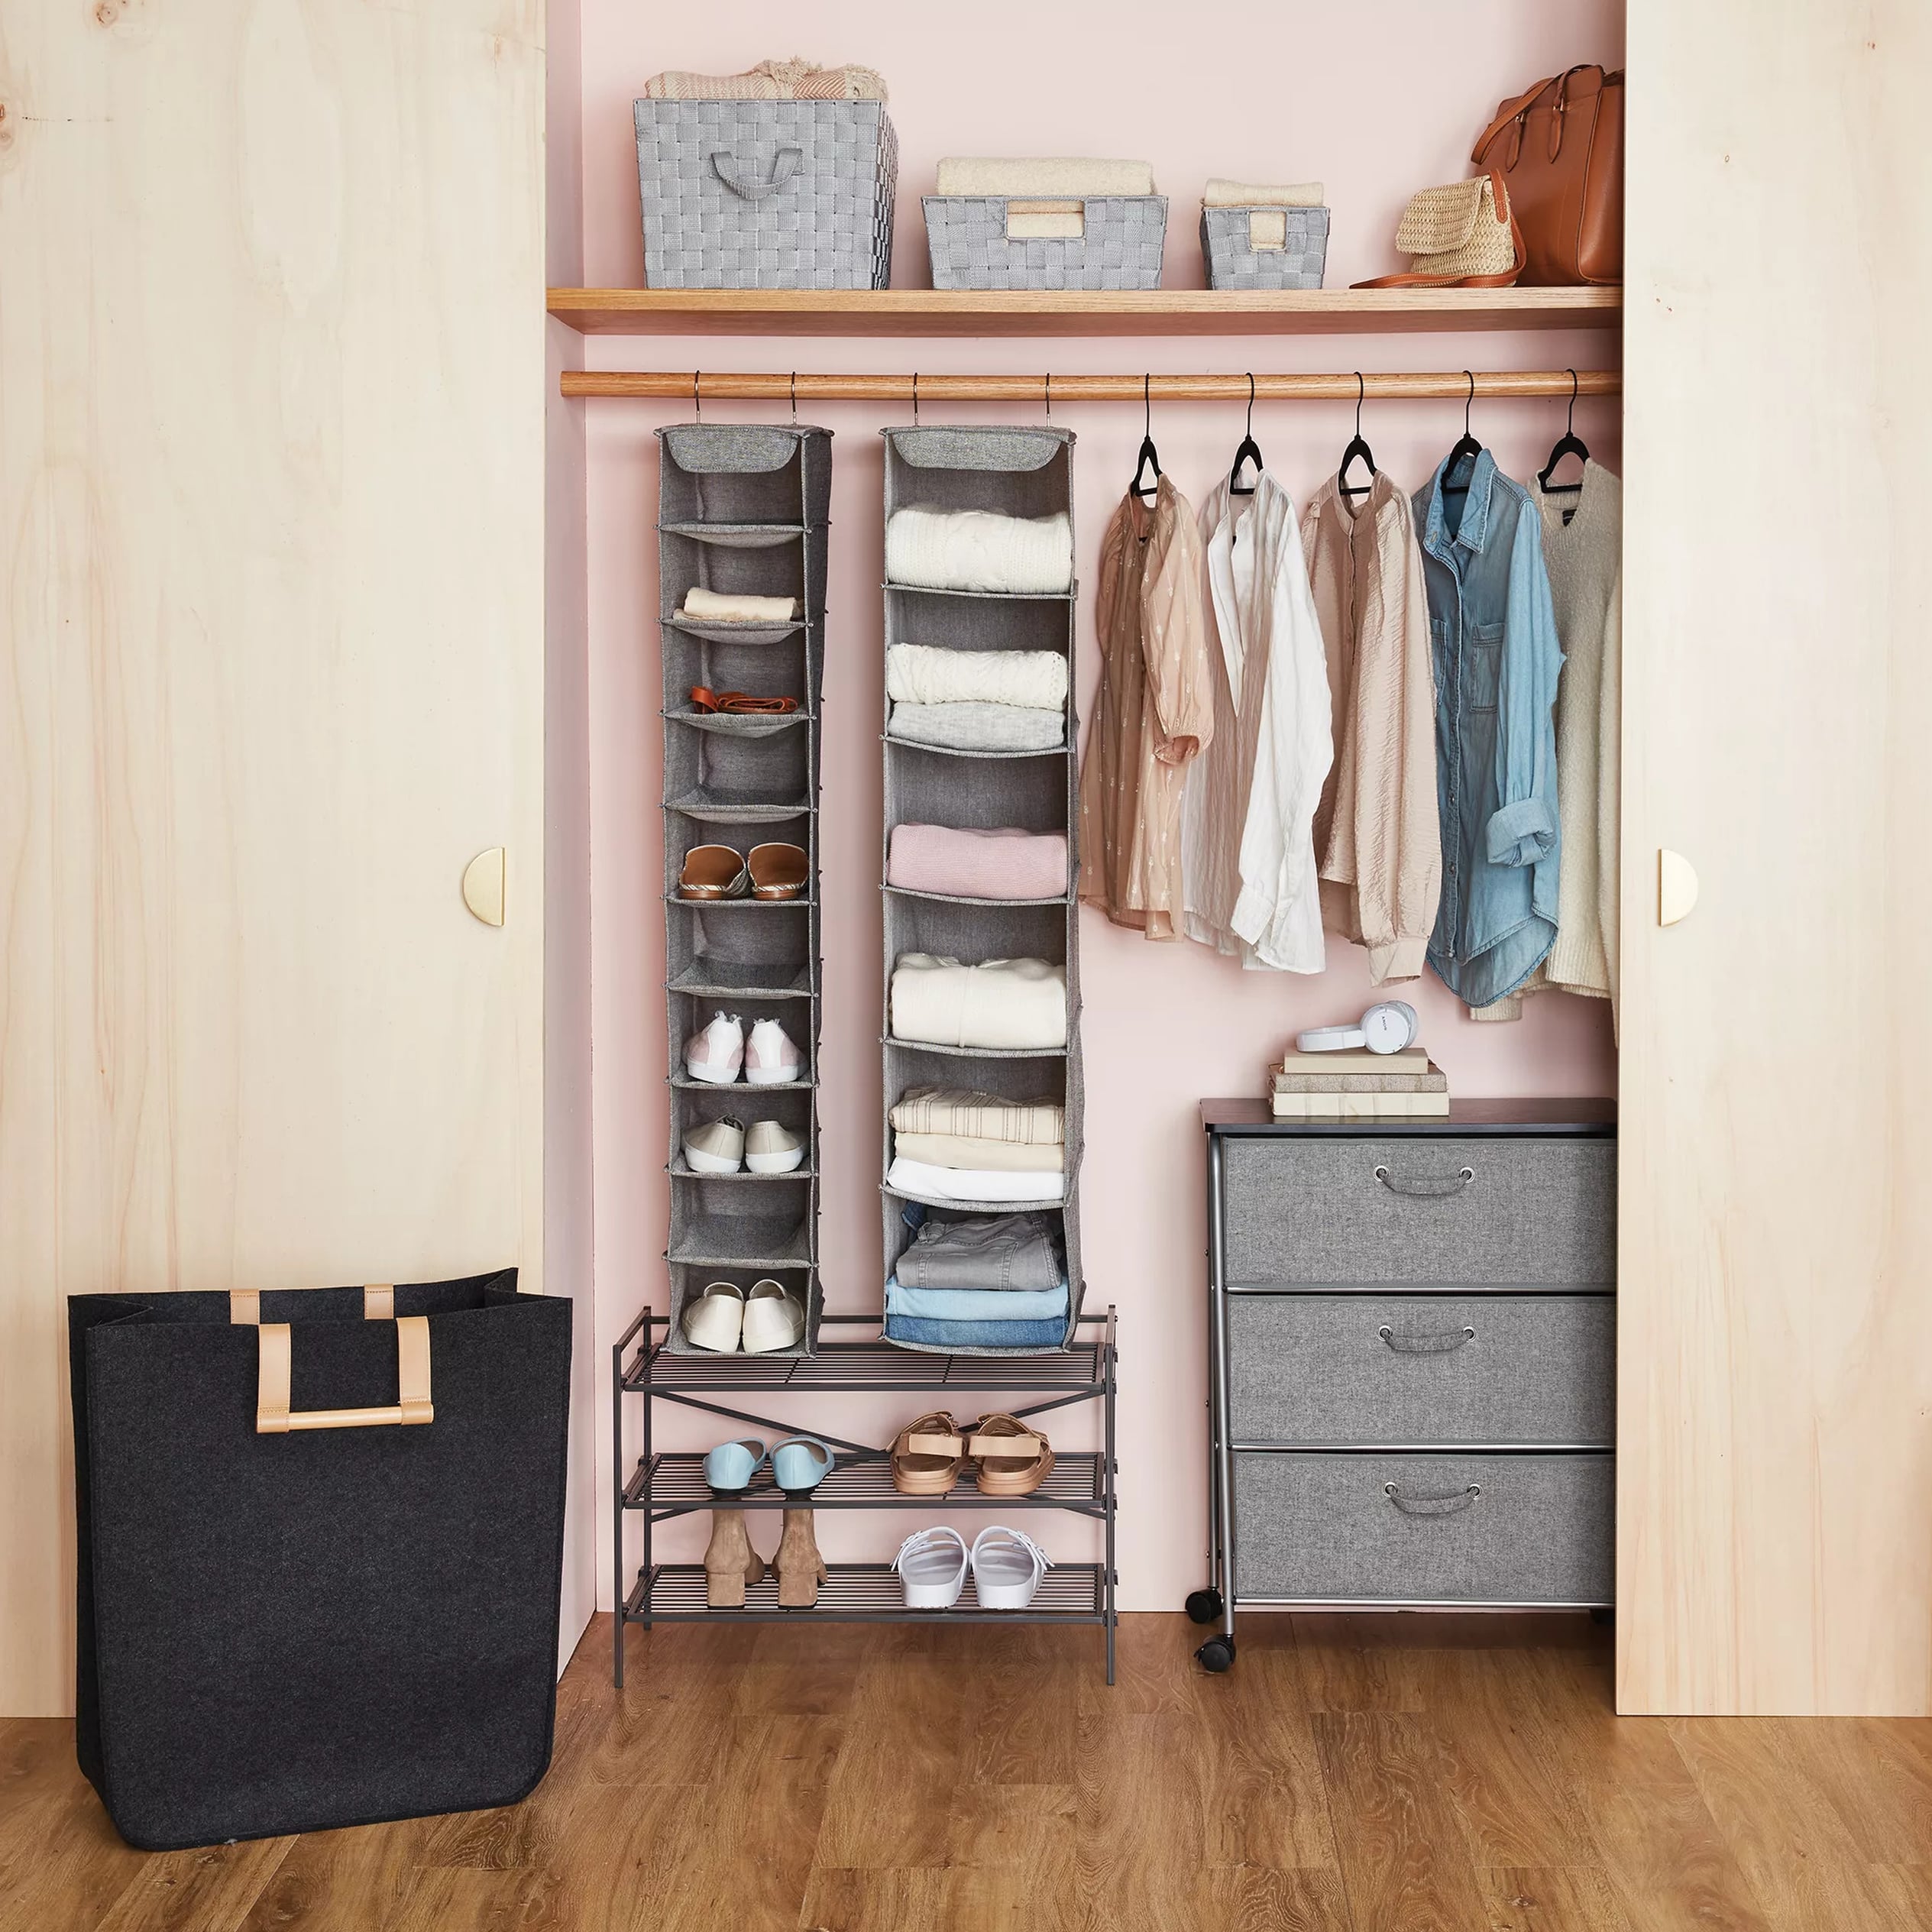 Dorm-Room Closet Organization and Clothes Storage Ideas